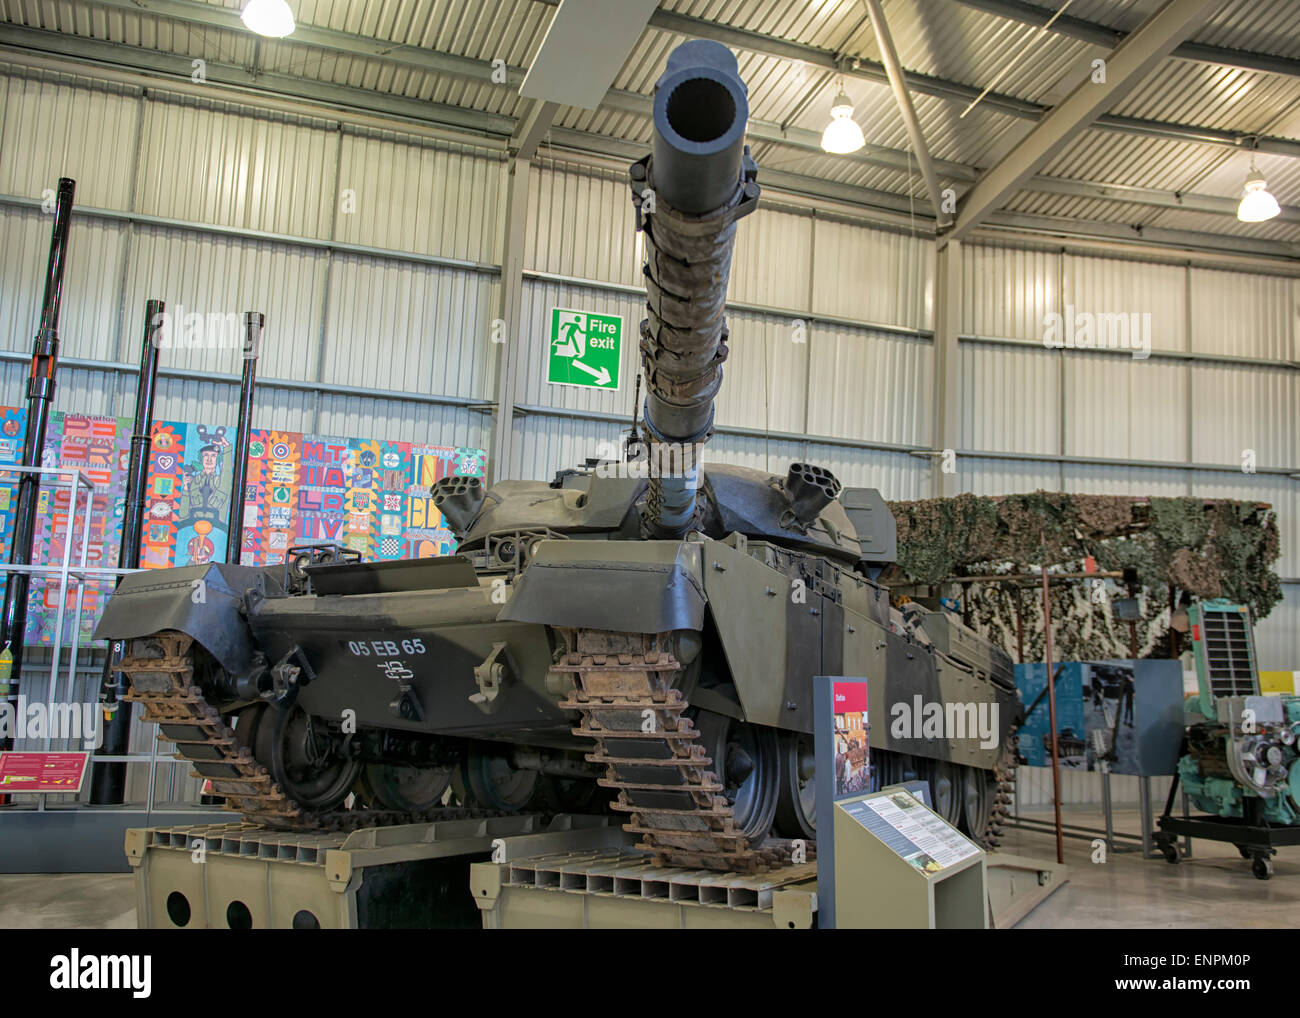 Chieftain Main Battle Tank at Tank Museum in Bovington, UK Stock Photo